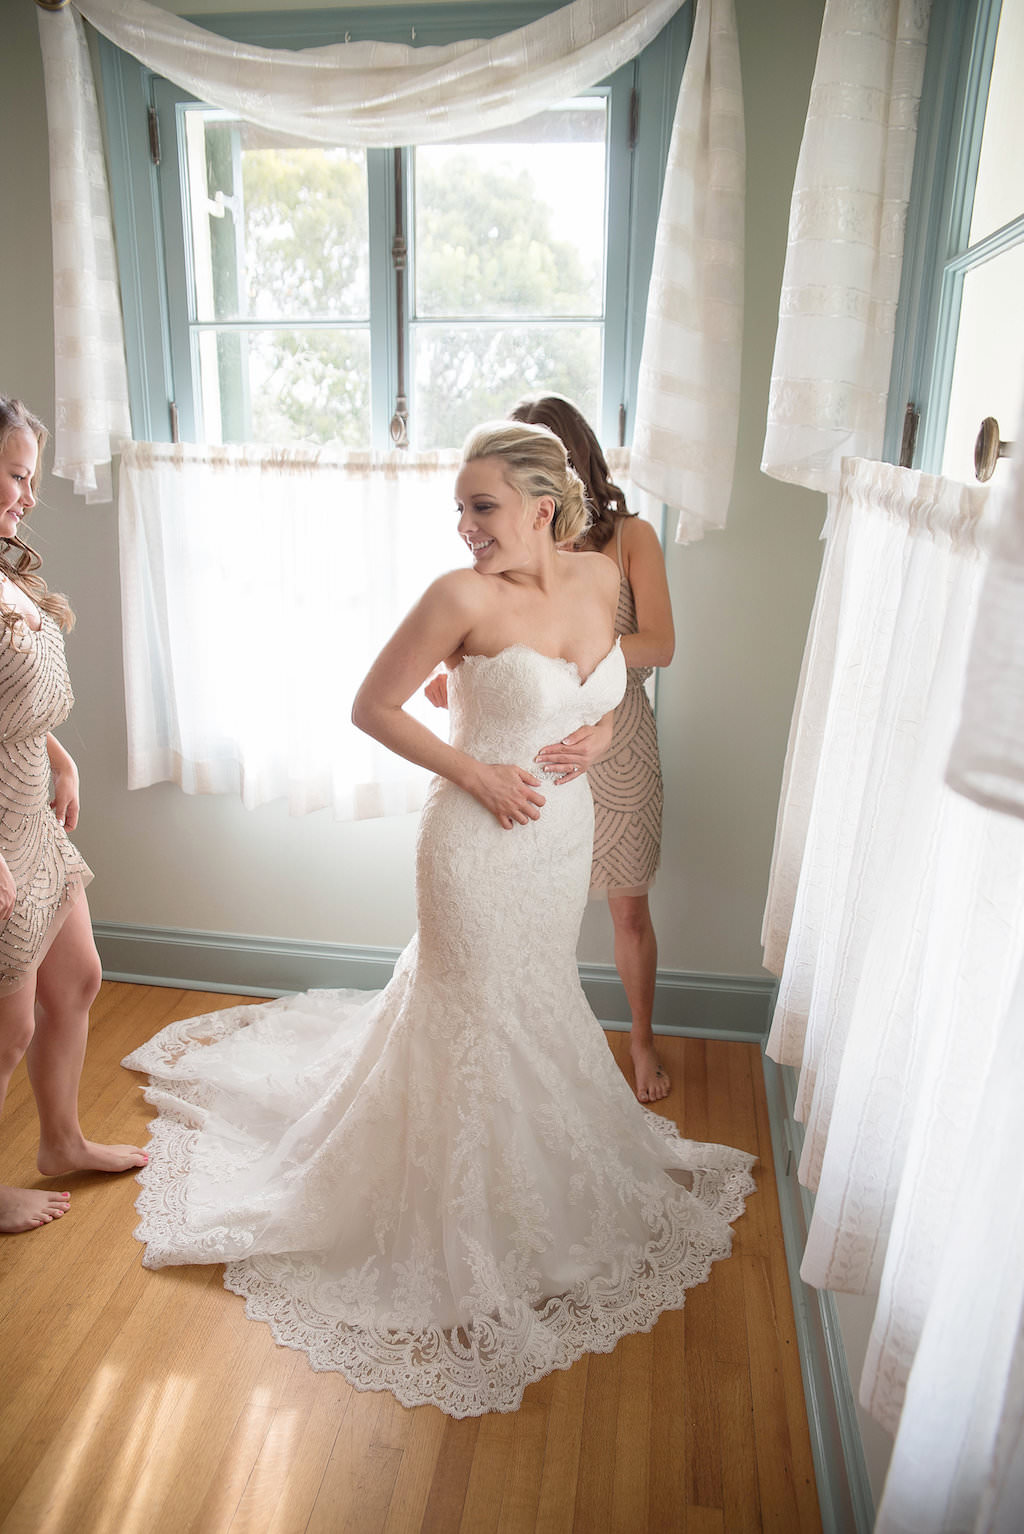 Bride Getting Ready Interior Portrait in Strapless Lace Mermaid Allure Bridals Wedding Dress | Sarasota Wedding Photographer Kristen Marie Photography